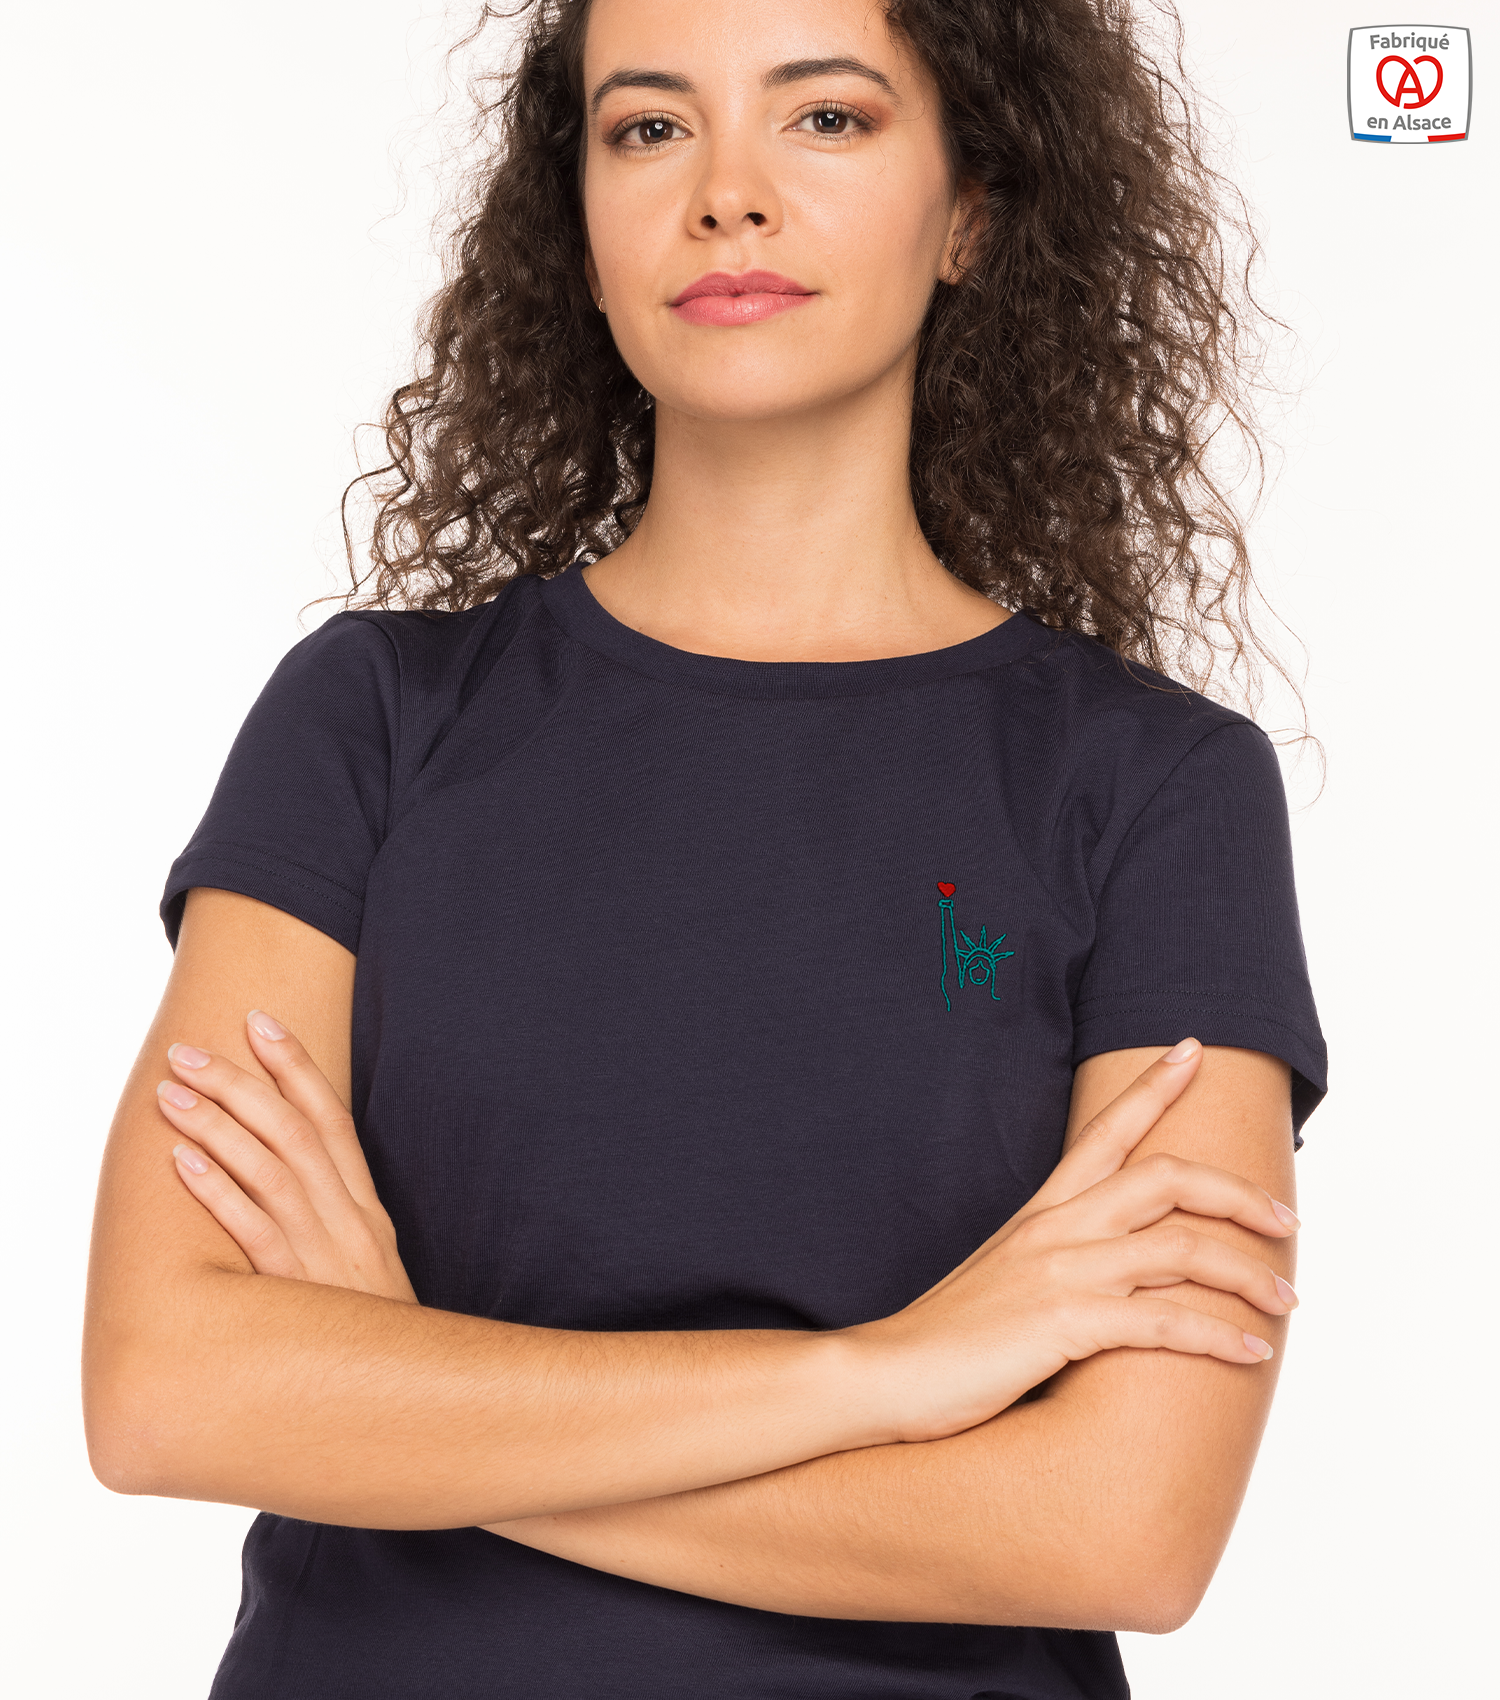 theim-t-shirt-femme-marine-statue-de-la-liberte-made-in-alsace-1500x1700px